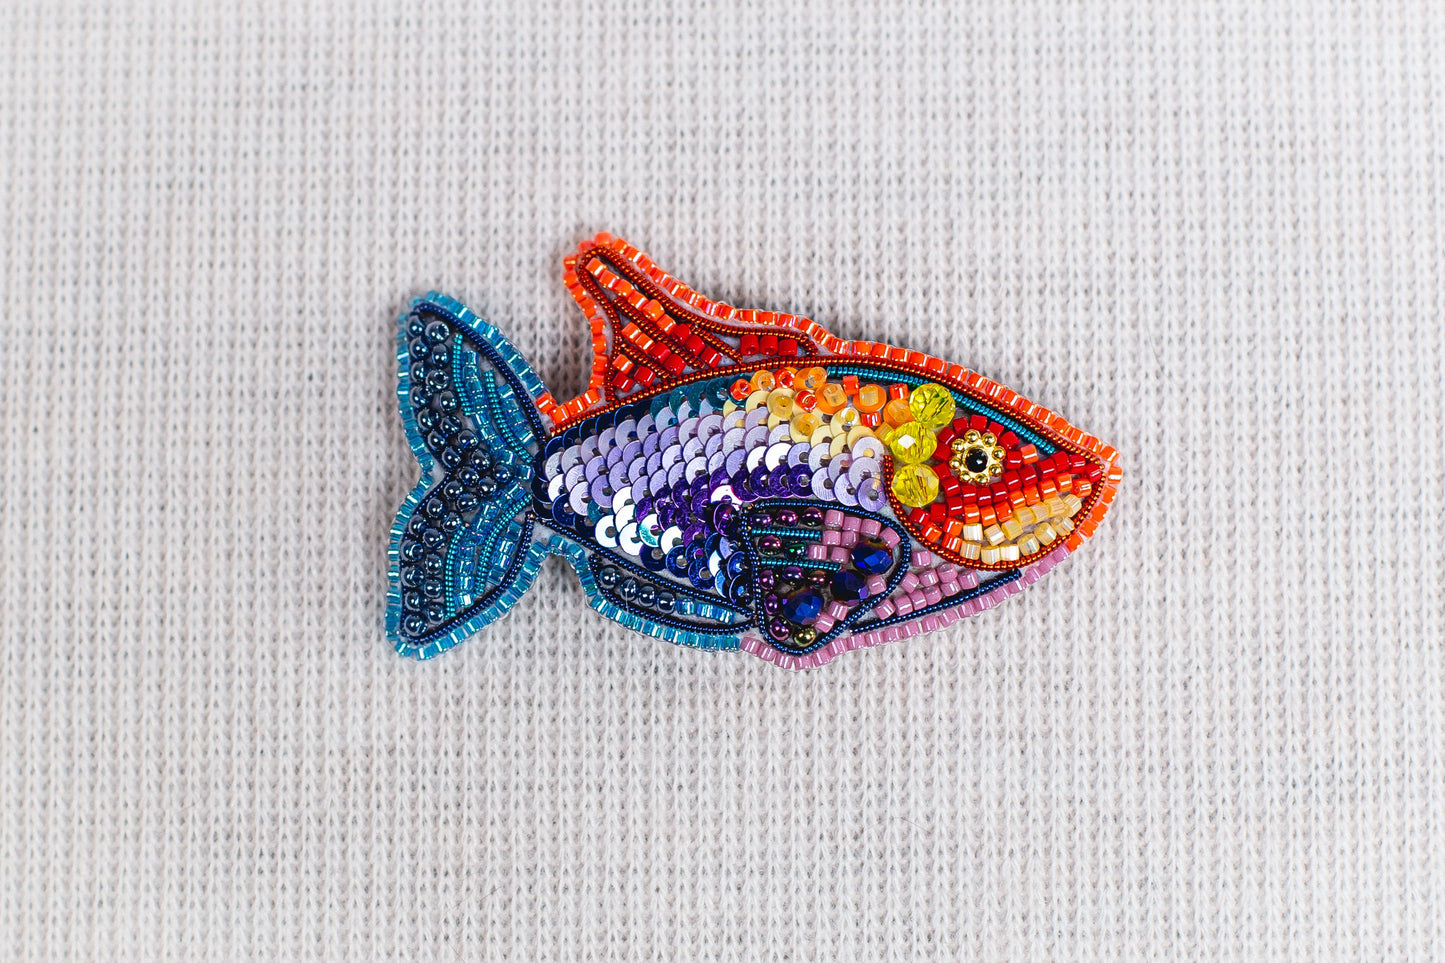 Set of 4 fishes Bead Embroidery kits. Seed Bead Brooch kits. DIY Craft kits. Beadweaving Kits. Needlework beading